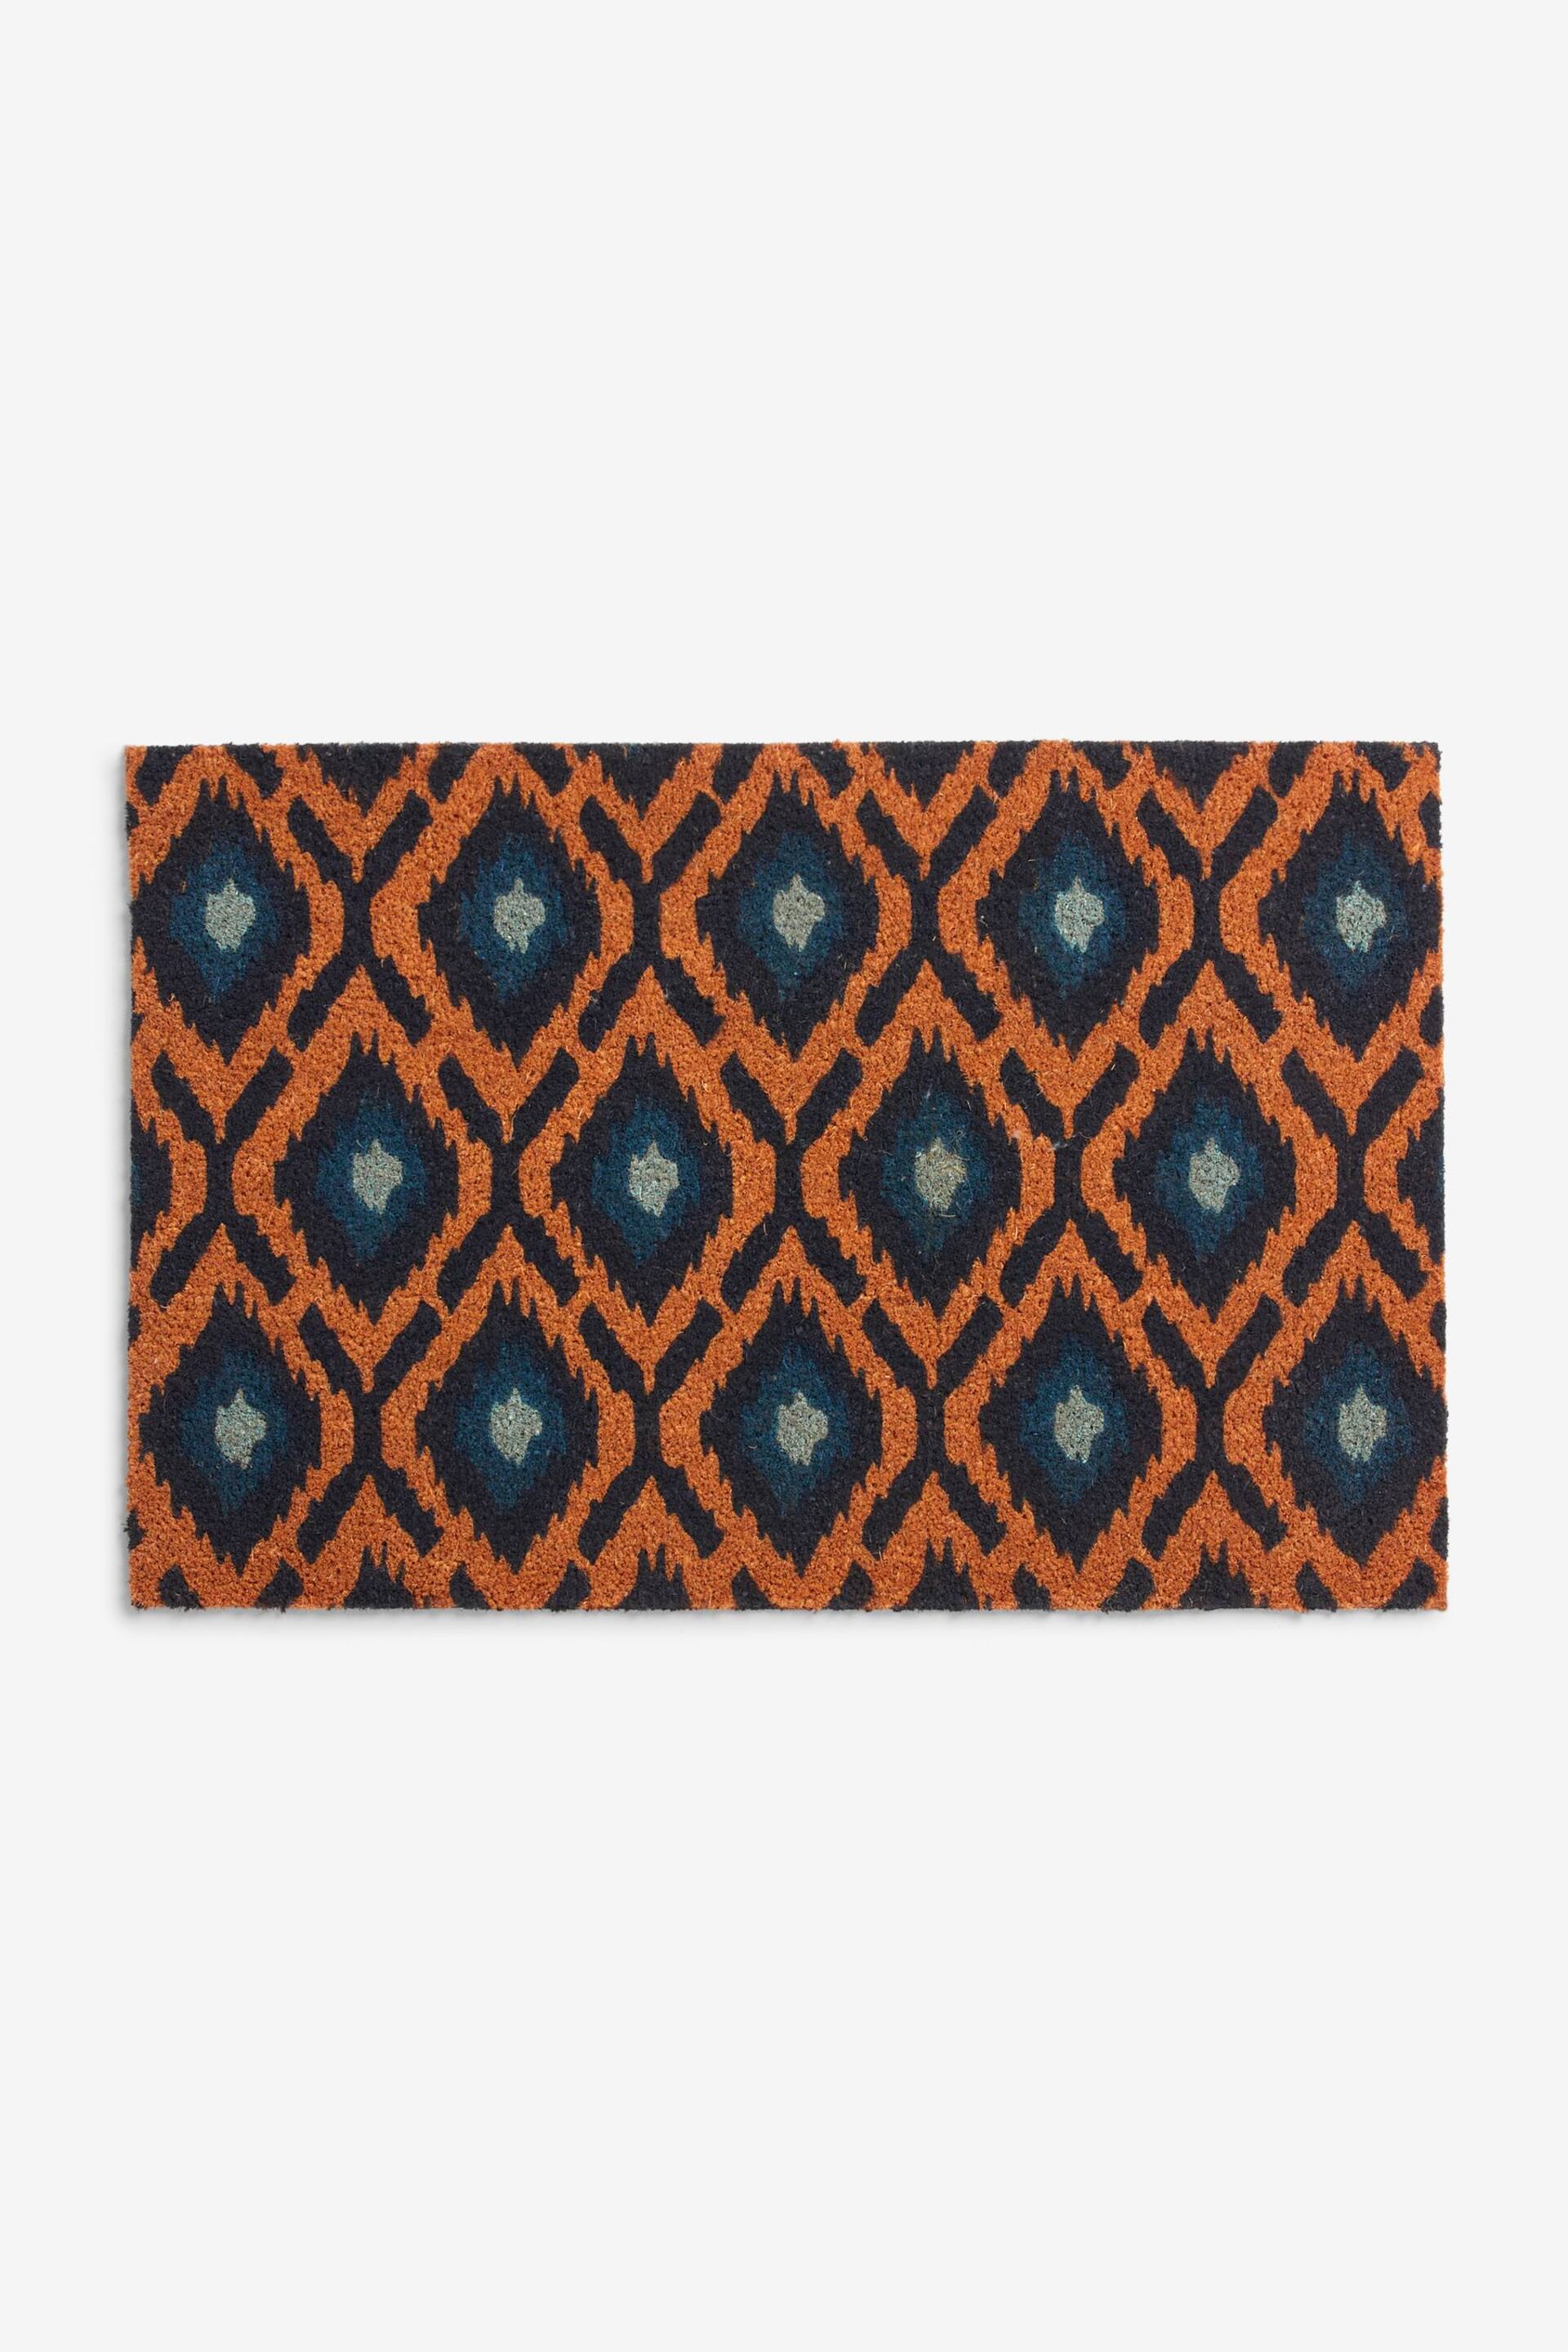 Blue Ikat Print Doormat - Image 3 of 3